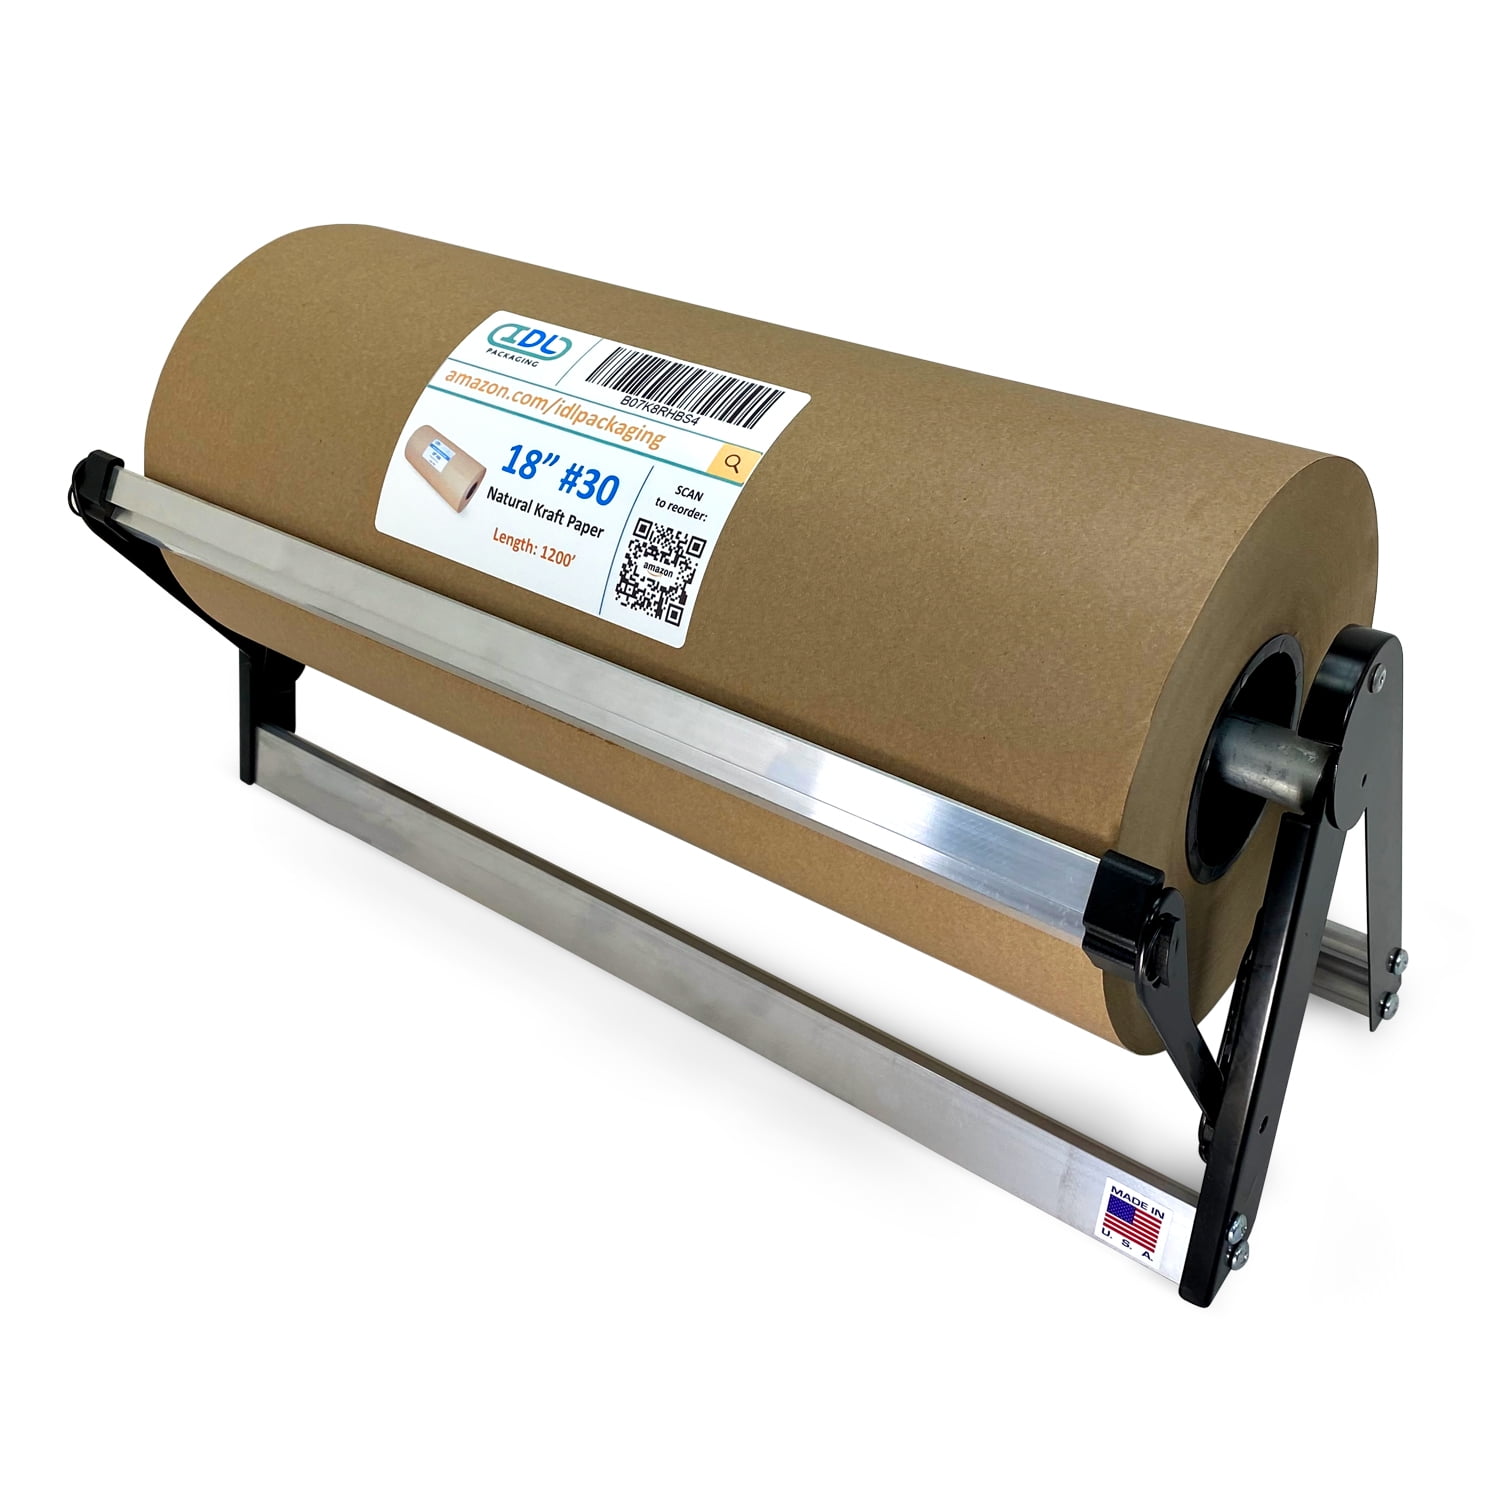 Details about   18-inch Long Standard Paper Cutter Dispenser for Butcher Gift Wrap Kraft Roll 